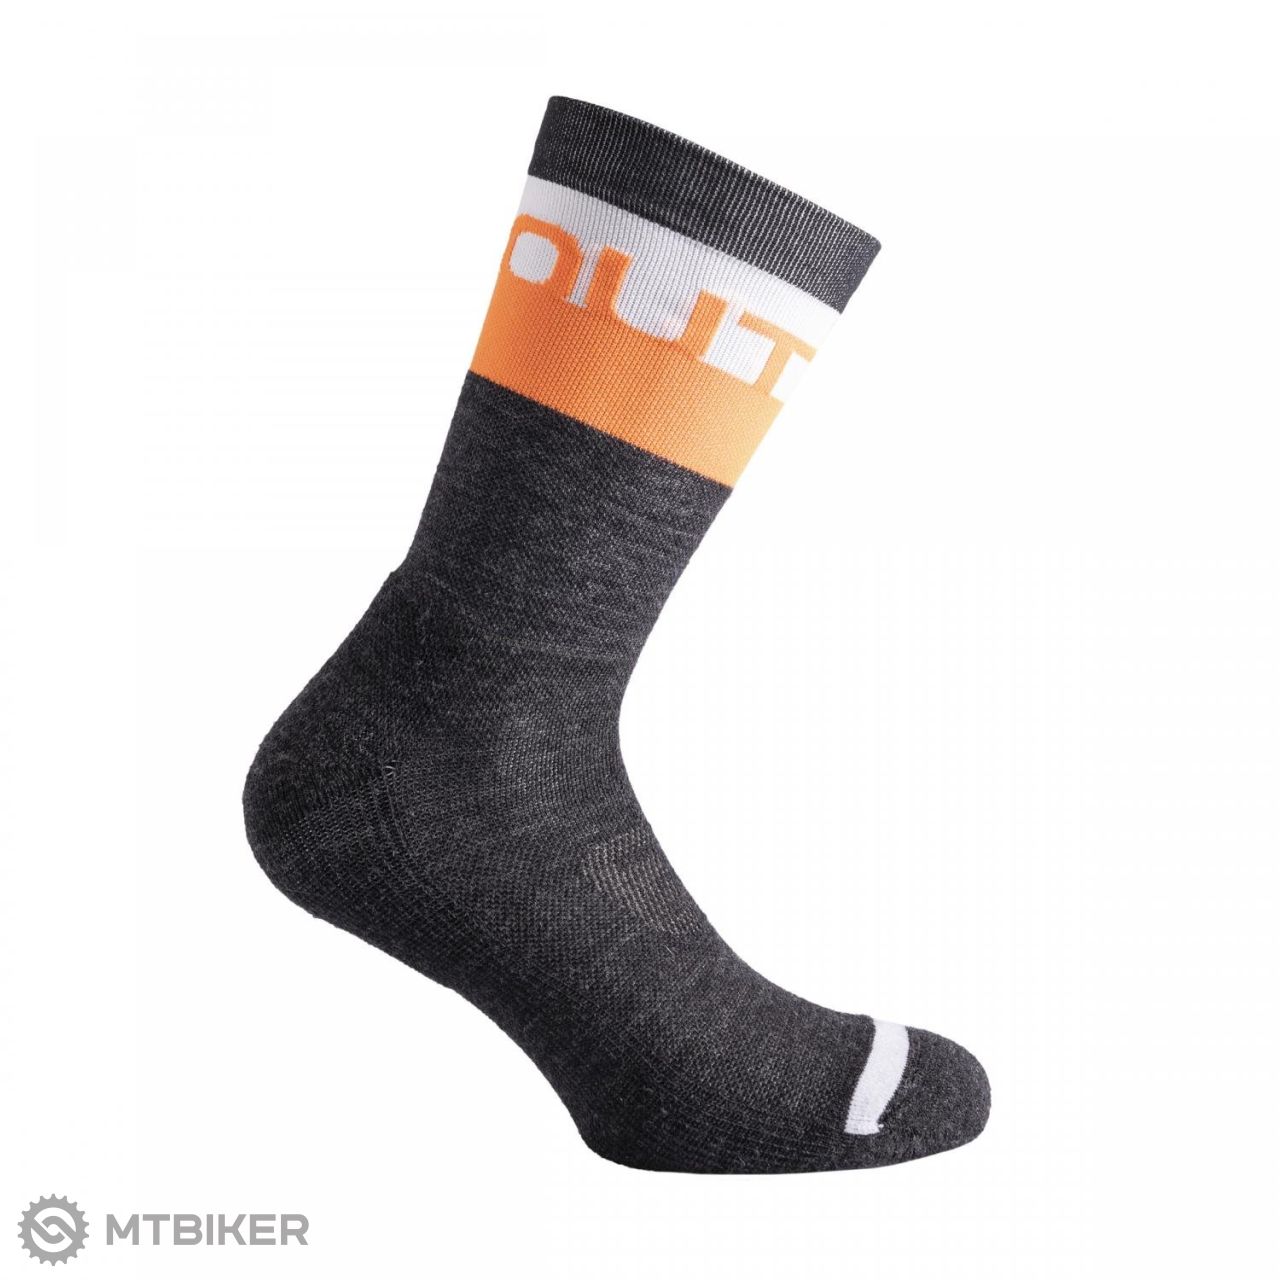 Dotout Ergo socks, grey/neon orange